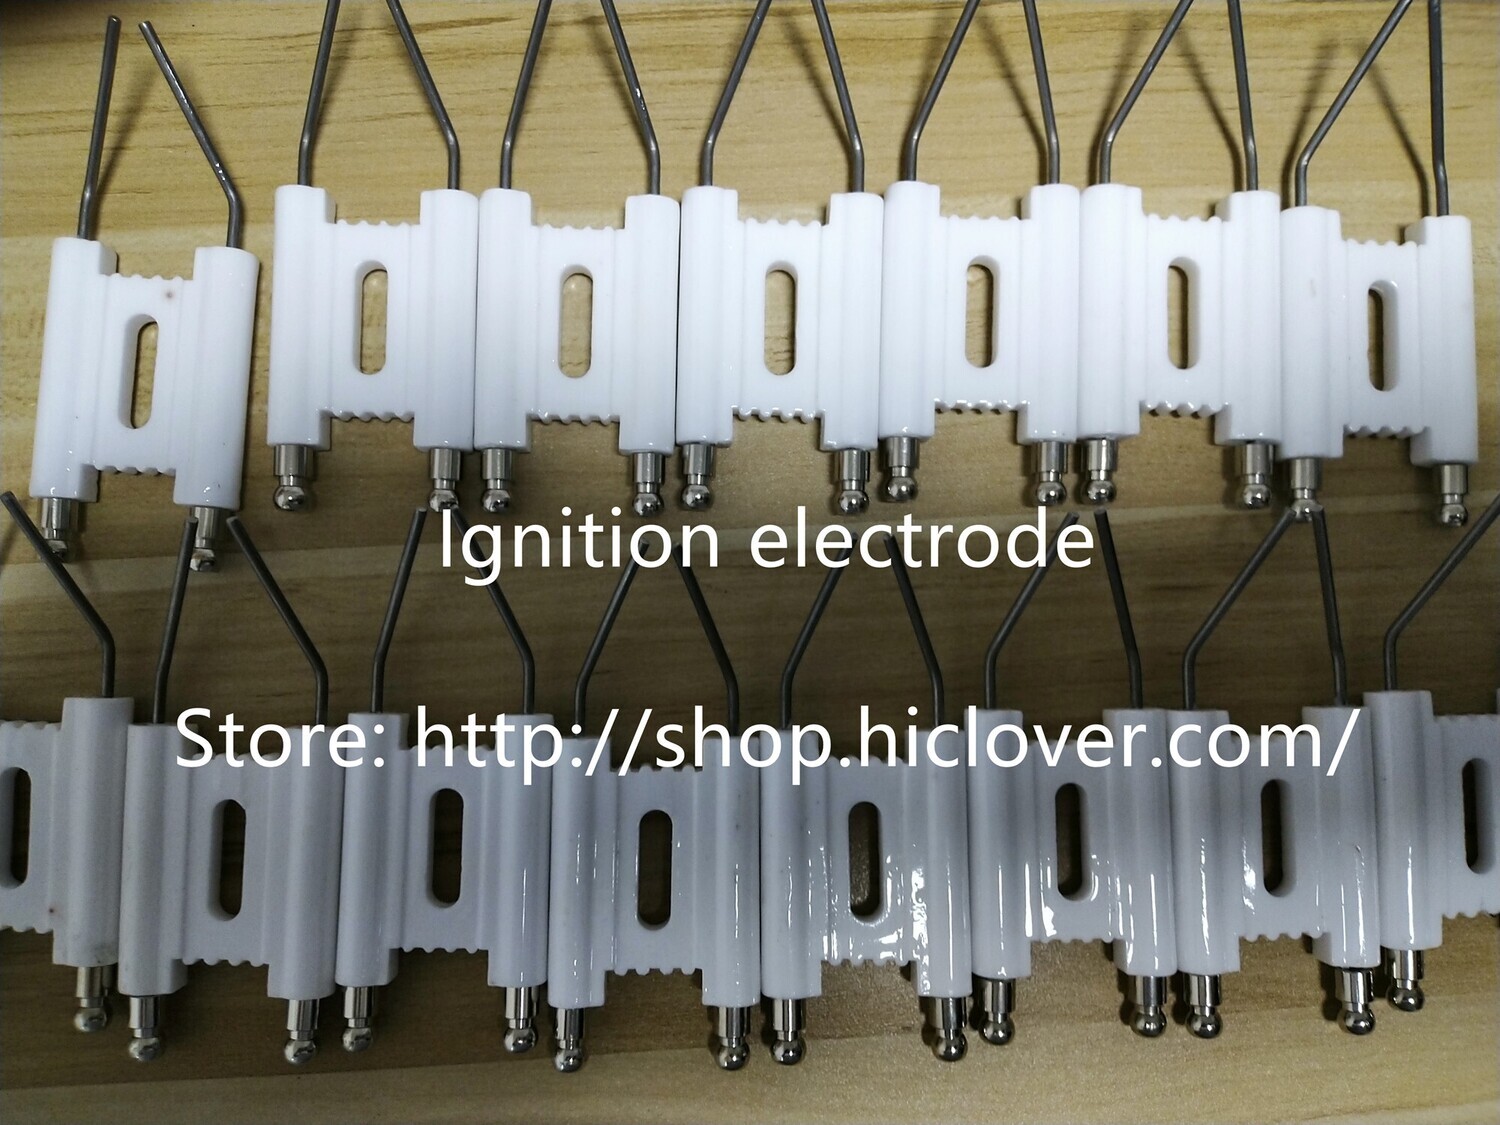 Ignition electrode